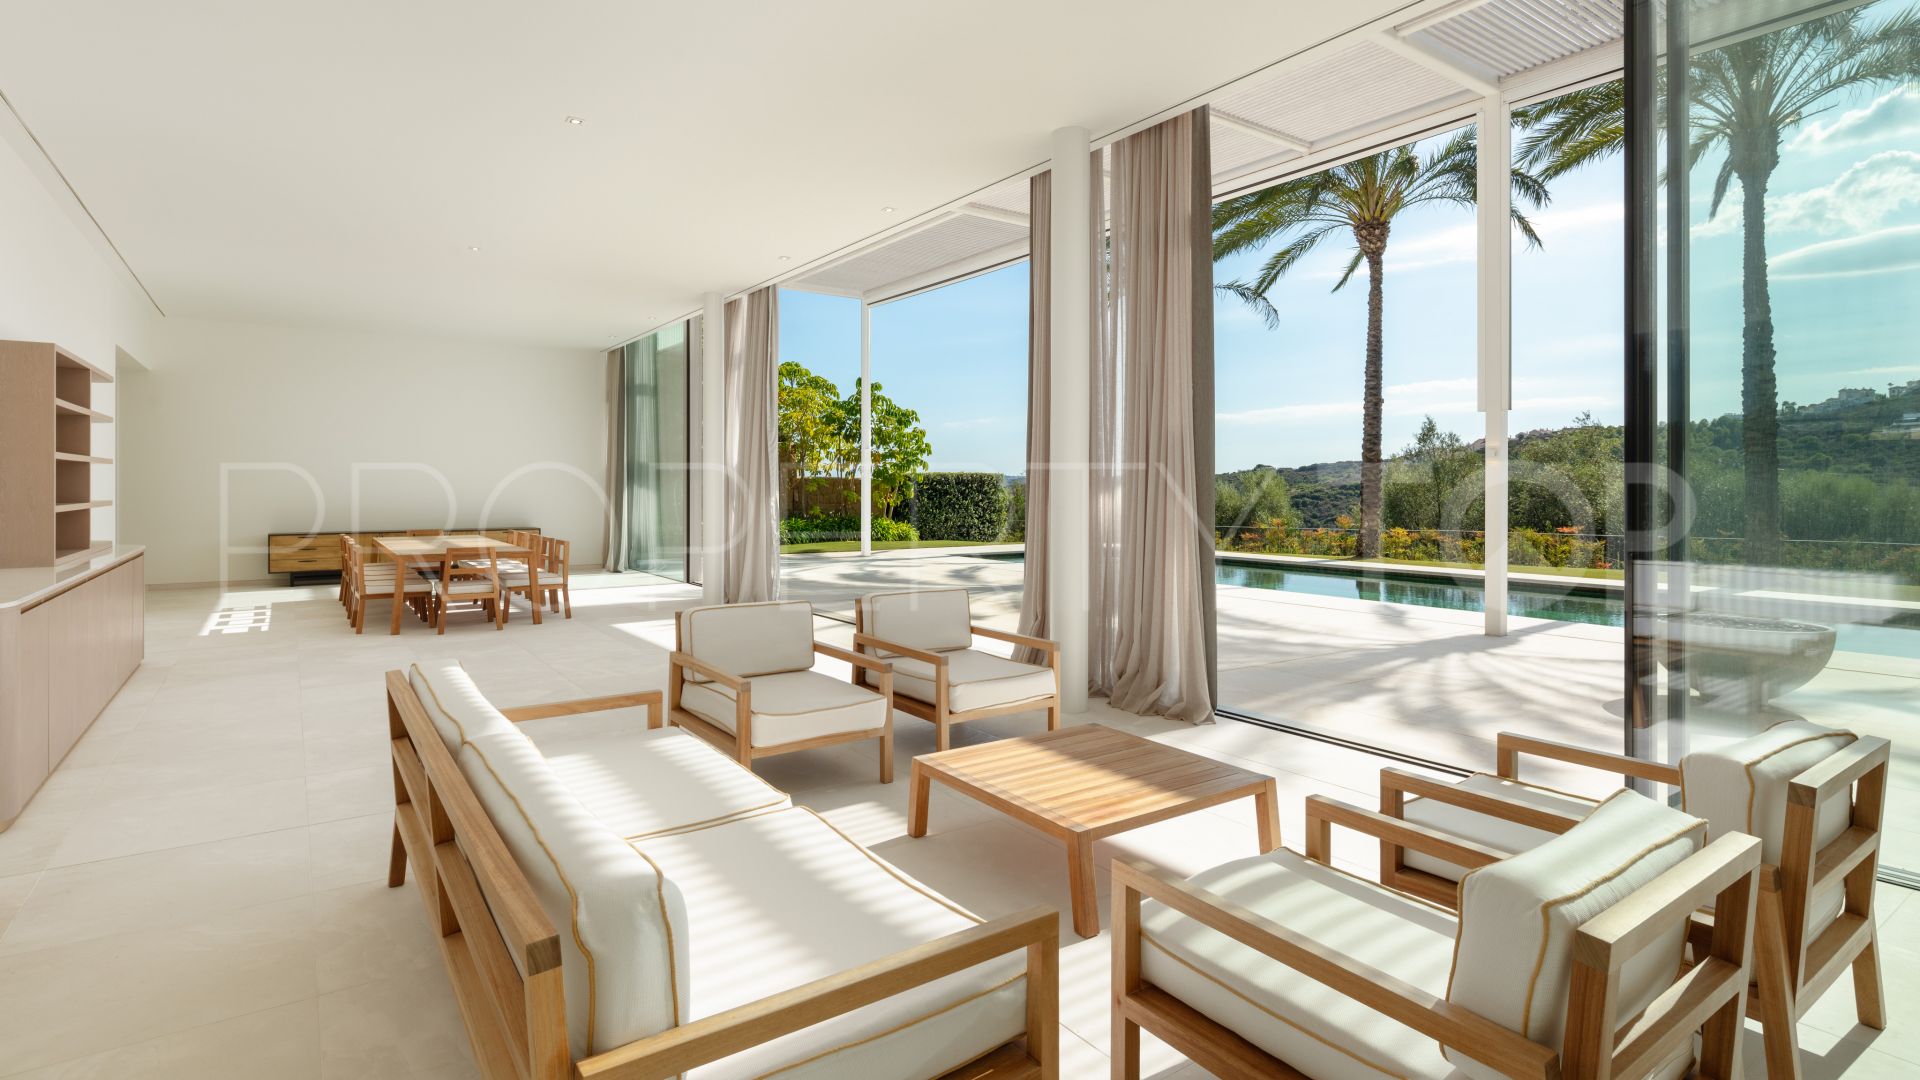 4 bedrooms villa in Finca Cortesin for sale